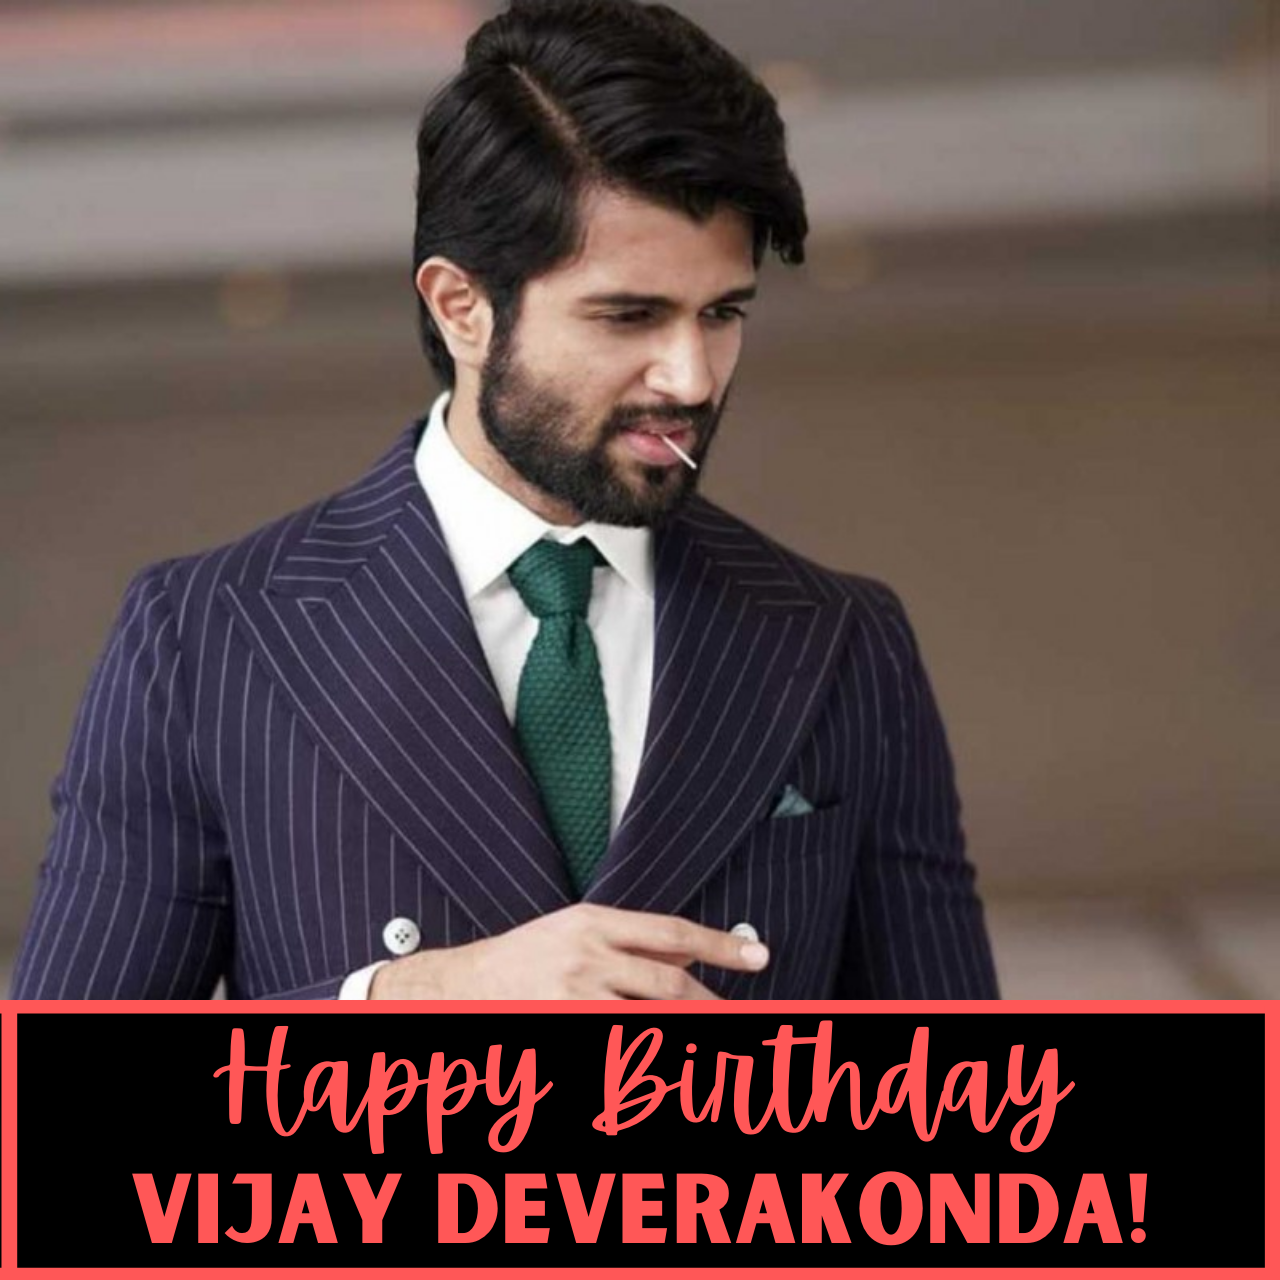 Happy Birthday Vijay Deverakonda: Wishes, HD Images (photos), Videos, Status, Quotes, and WhatsApp Status Video Download